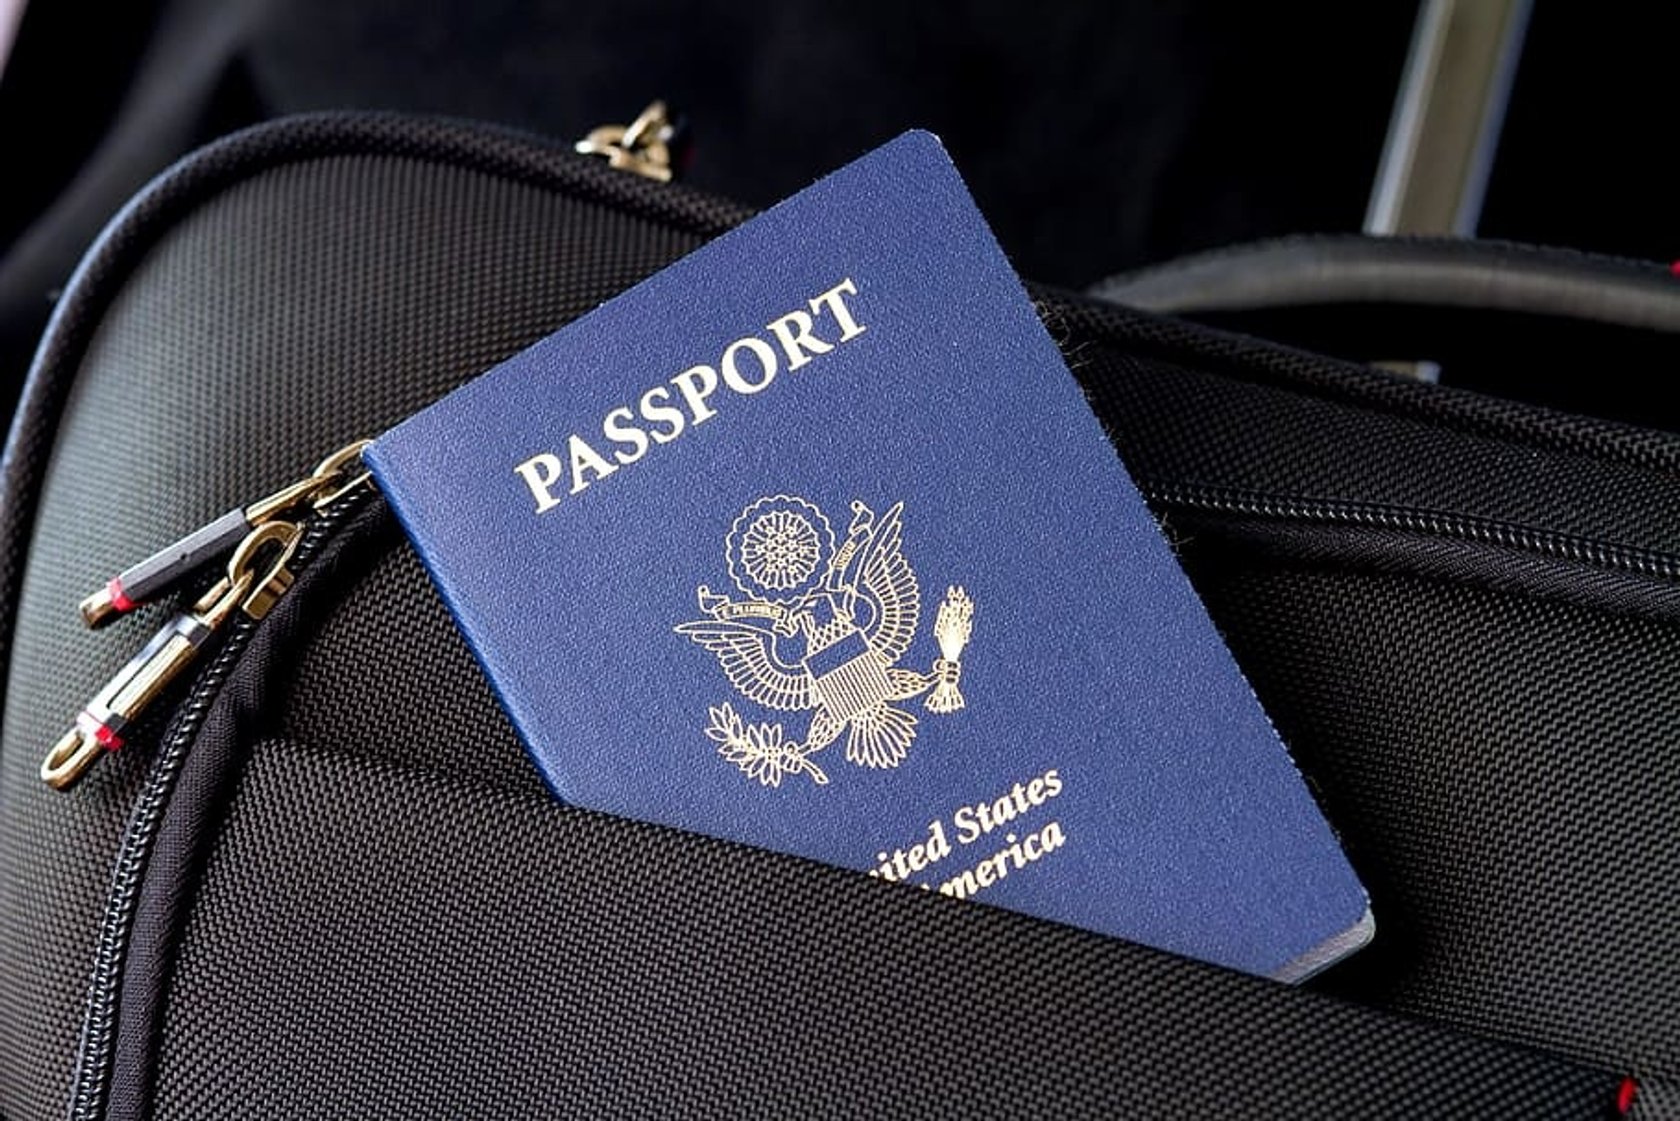 American Passport Photo Cutter, US Passport Photo Cutter,Passport Photo  Cutter, USA Passport Photo Cutter, Passport Size Photo Cutter, 2x2